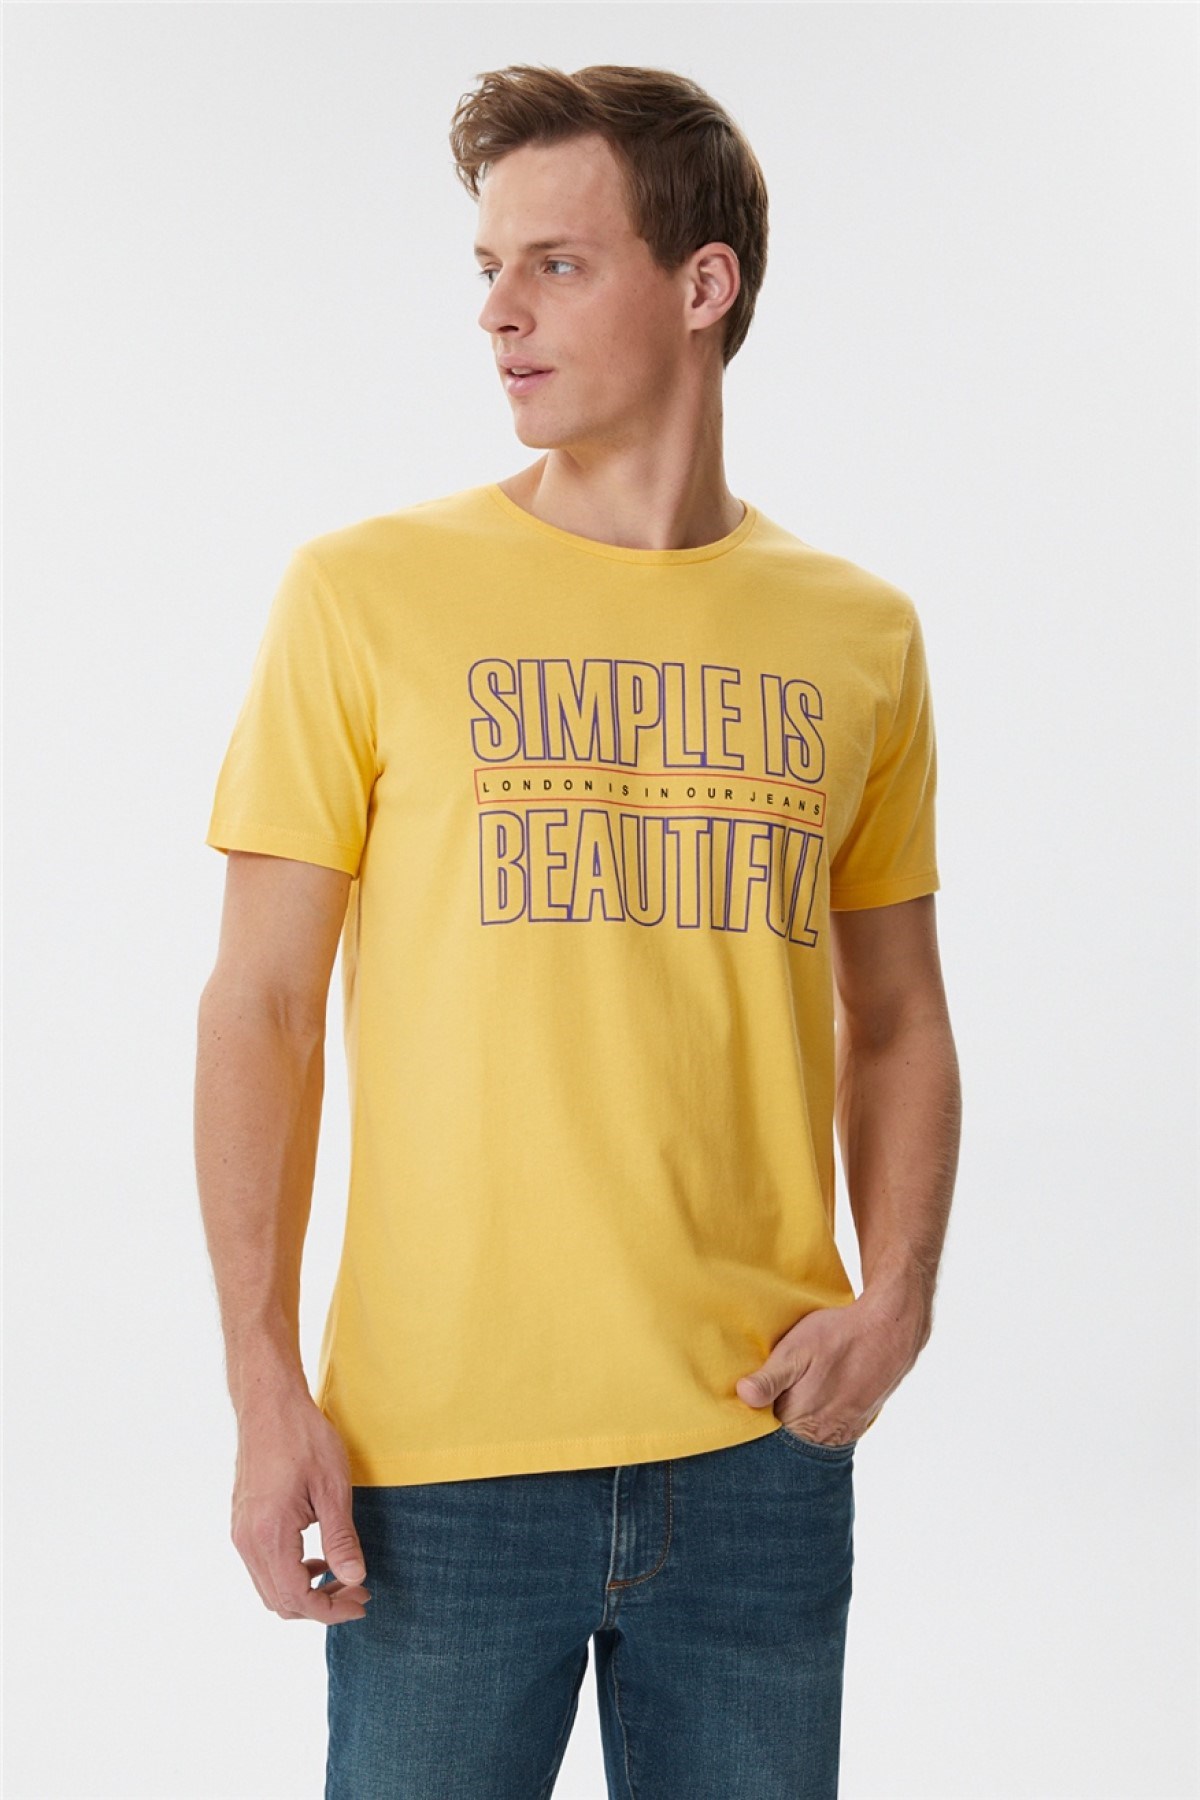 Lee Cooper Erkek T-Shirt 222 LCM 242027 Limon Sarı